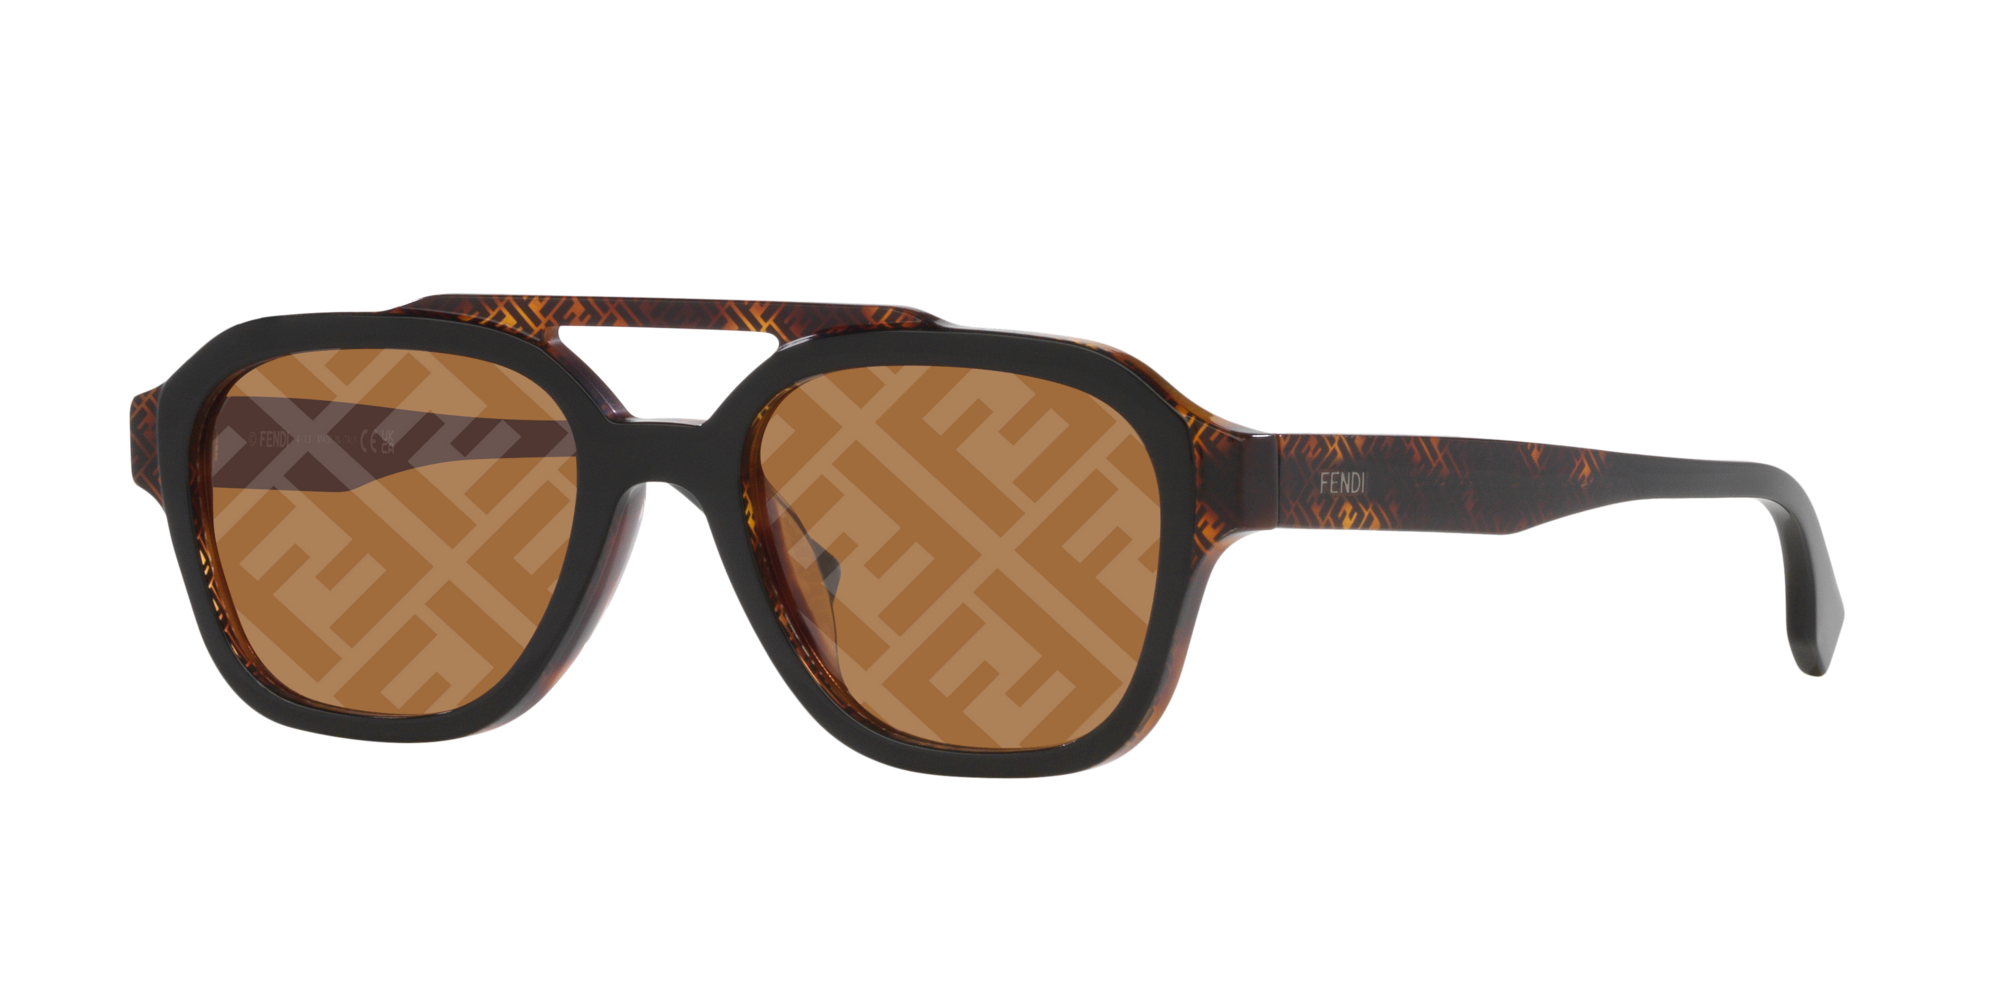 Tom Ford FT1008 55 Brown & Brown Sunglasses | Sunglass Hut USA